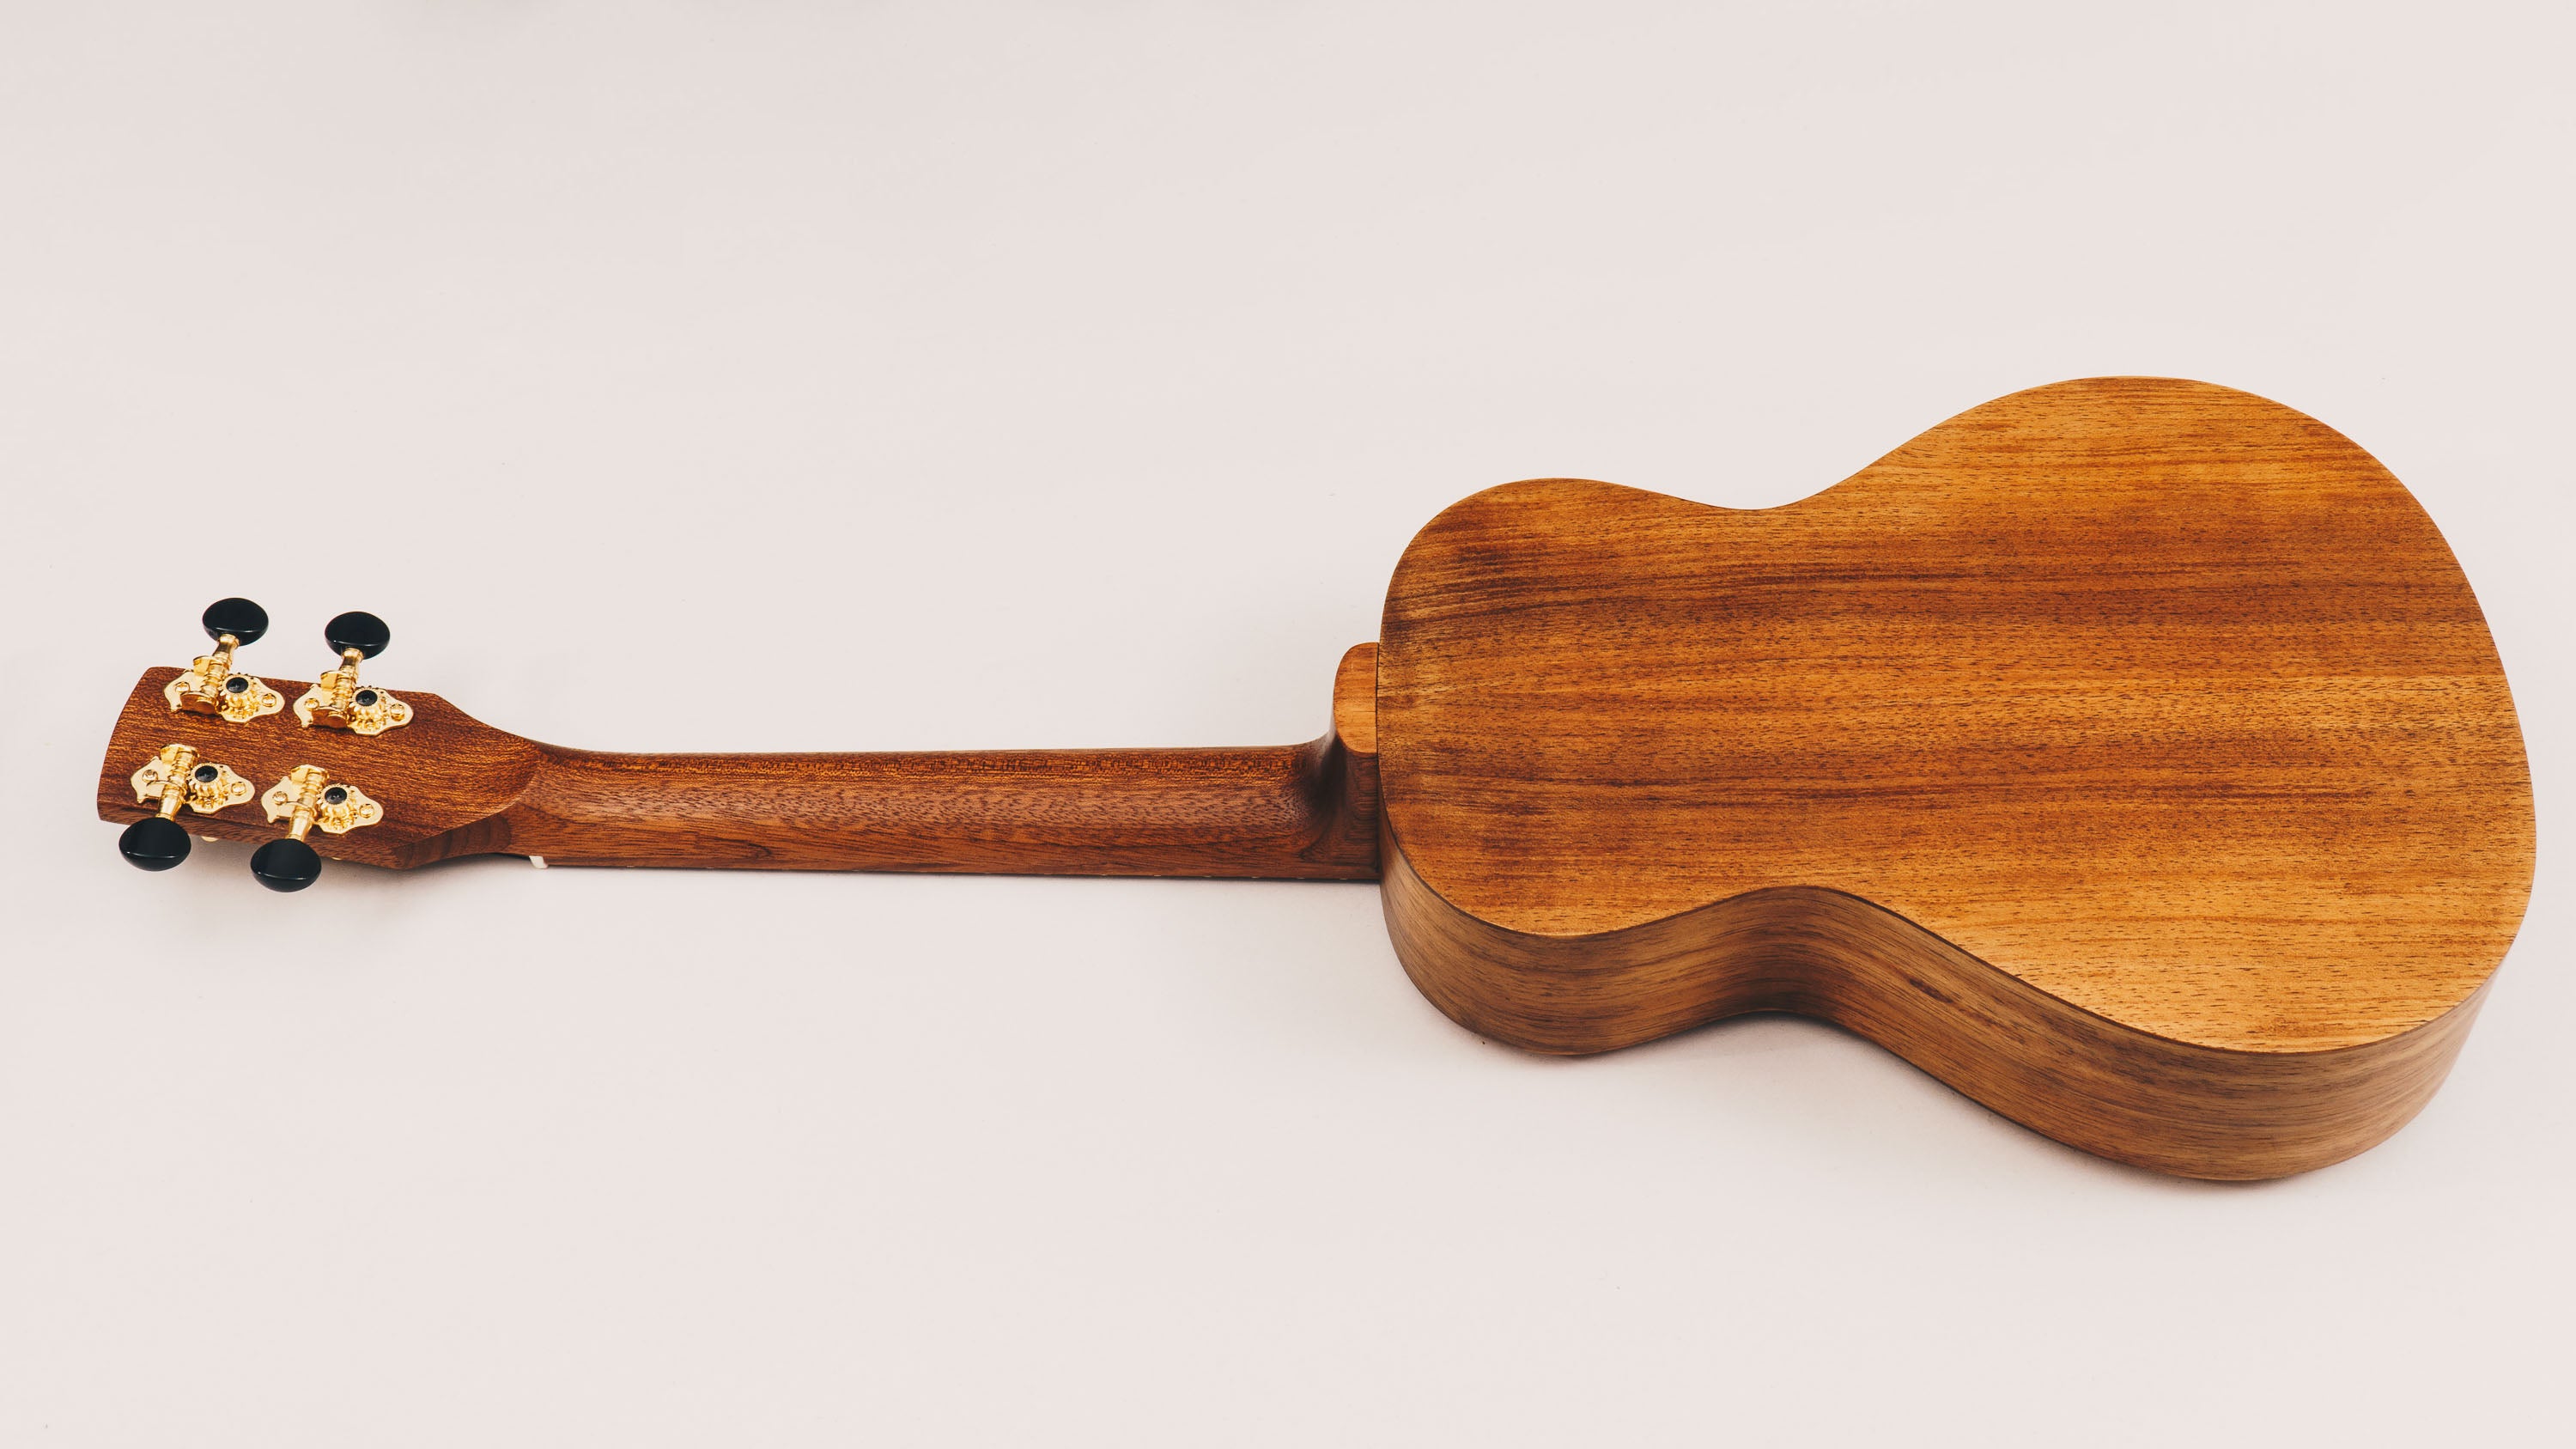 Tenor Ukulele - Tasmanian Blackwood - 'Style 1' Weissenborn Acoustic Lap Steel Slide Guitar by master luthier Richard Wilson. Handcrafted in Australia. Serial no. RW2319-409.